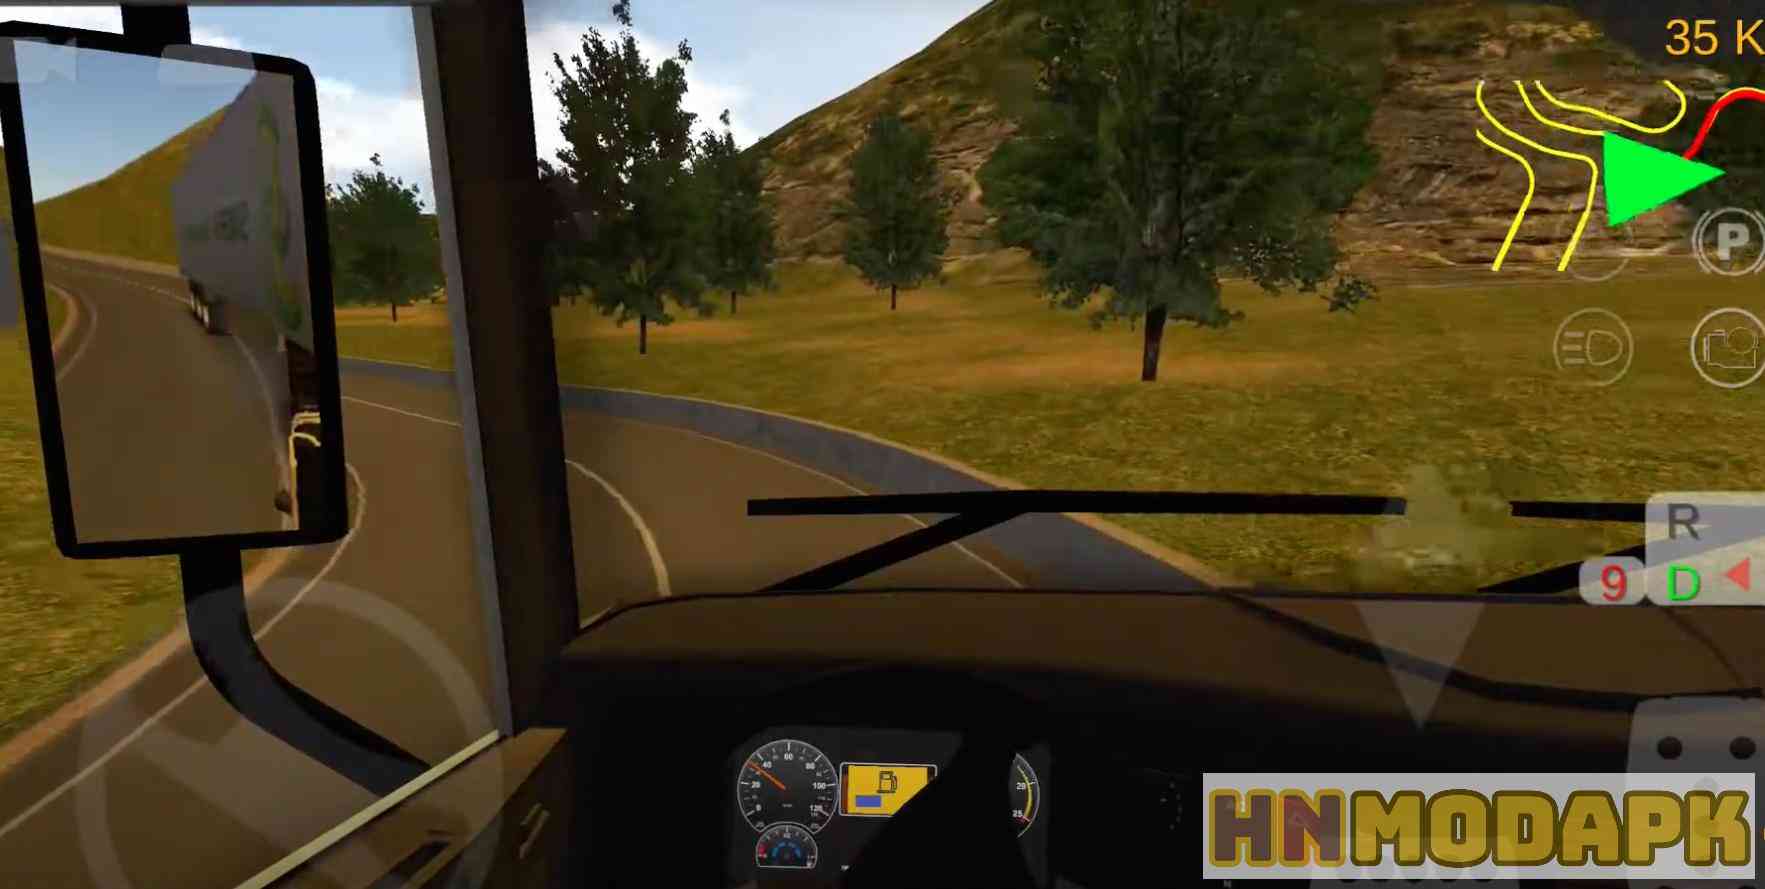 Heavy Truck Simulator MOD